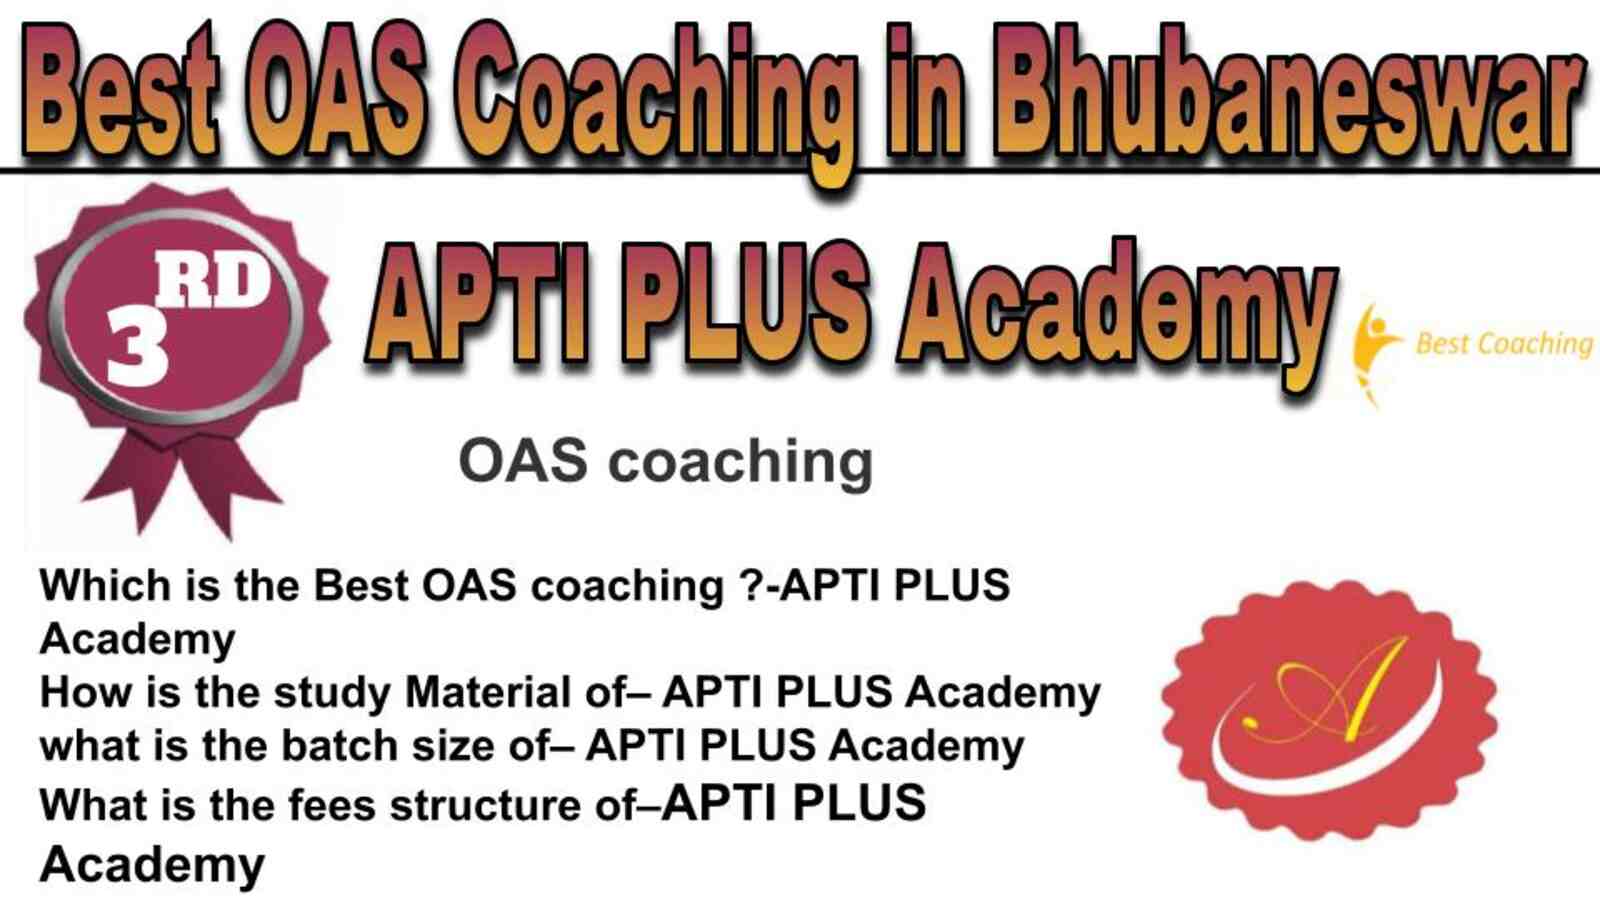 Rank 3 best OAS coaching in Bhubaneswar